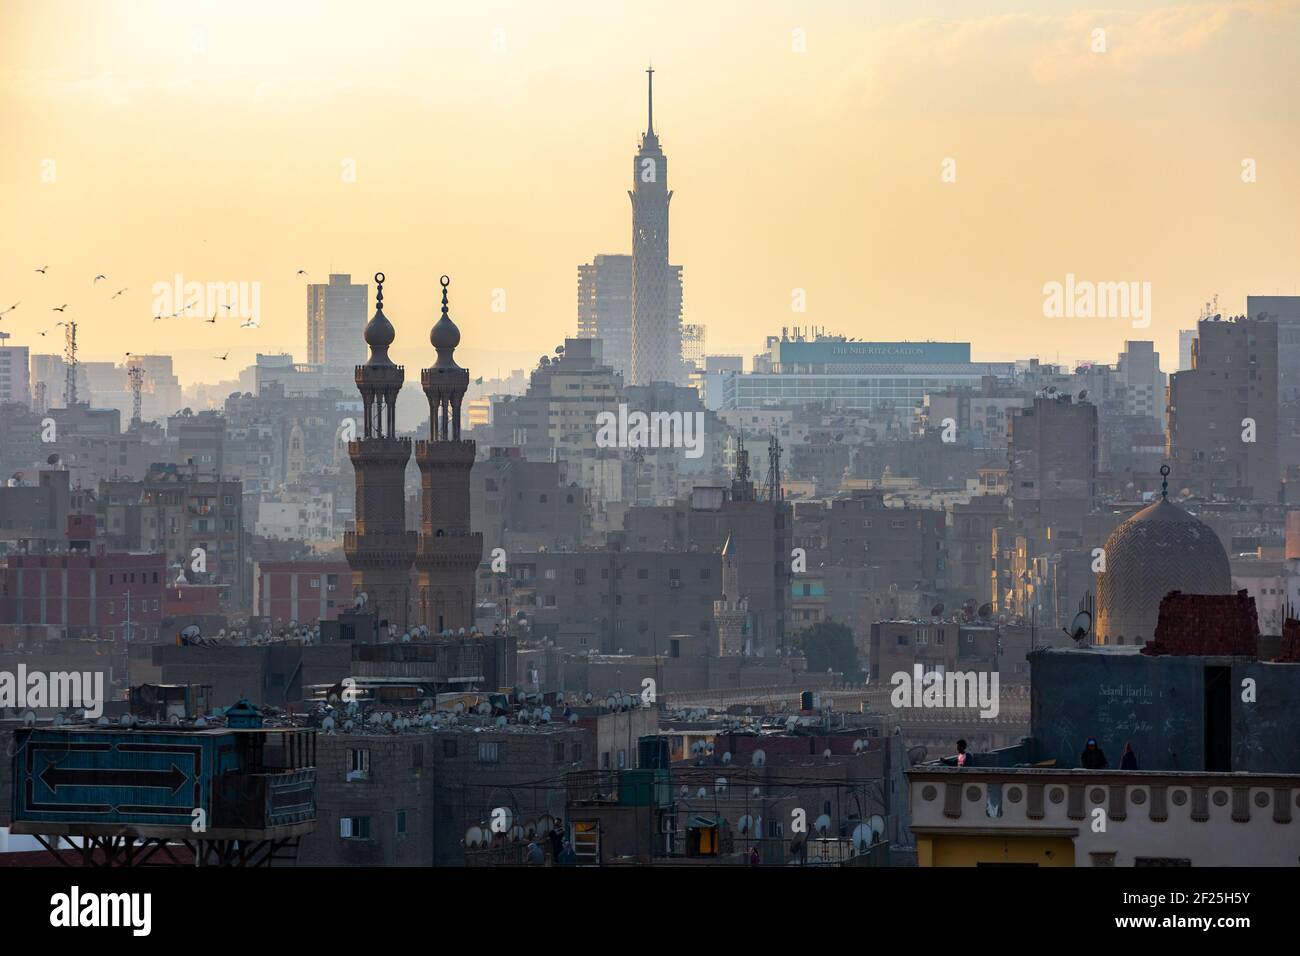 Atmospheric Cairo cityscape at sunset showing Cairo Tower and minarets, as seen from Al Azhar Park, Salah Salem St, El-Darb El-Ahmar, Cairo, Egypt Stock Photo